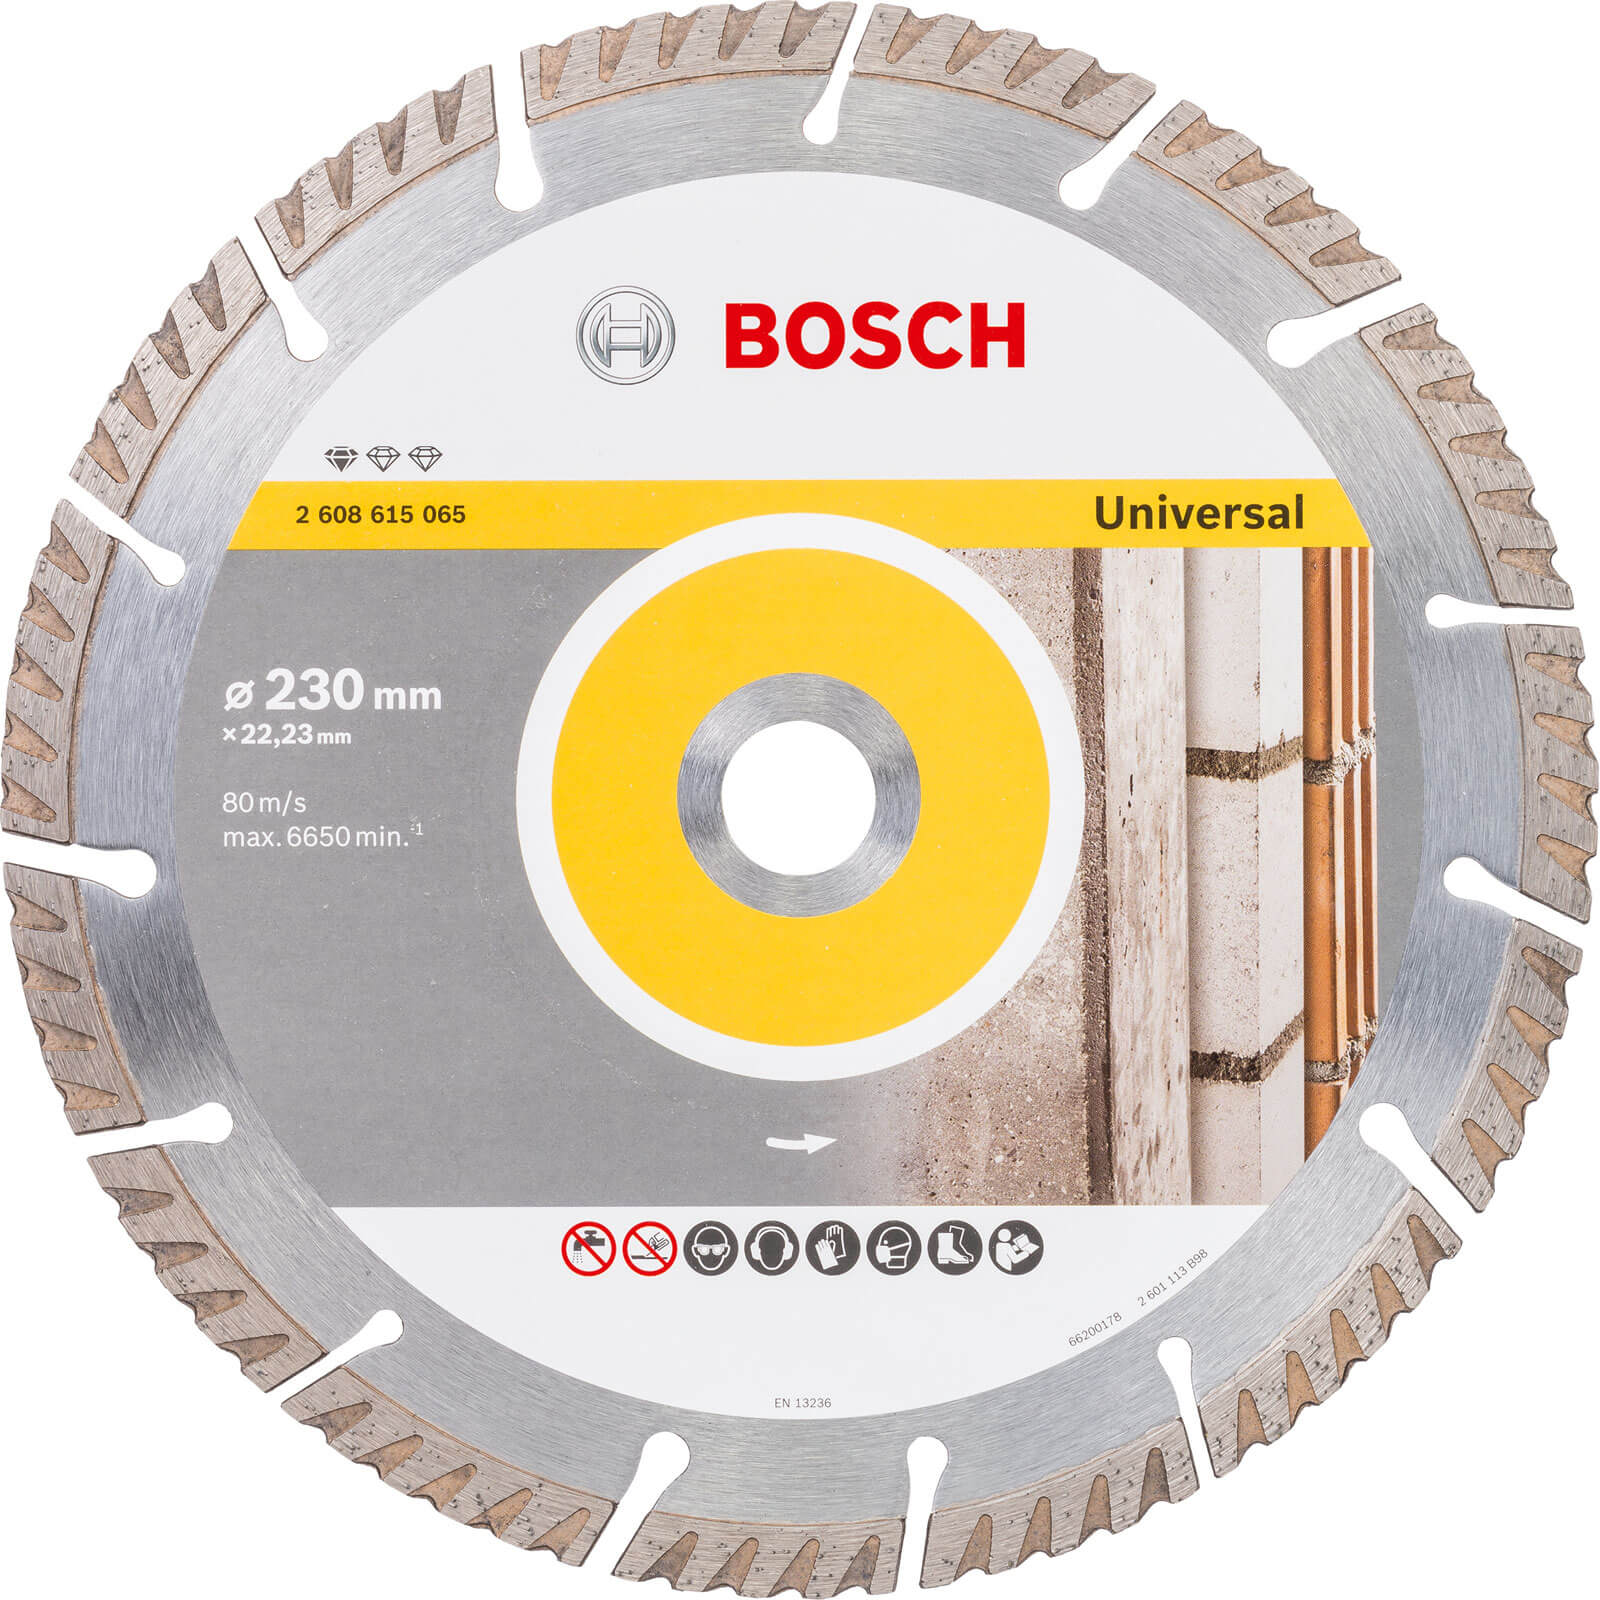 Image of Bosch Universal Diamond Cutting Disc 230mm